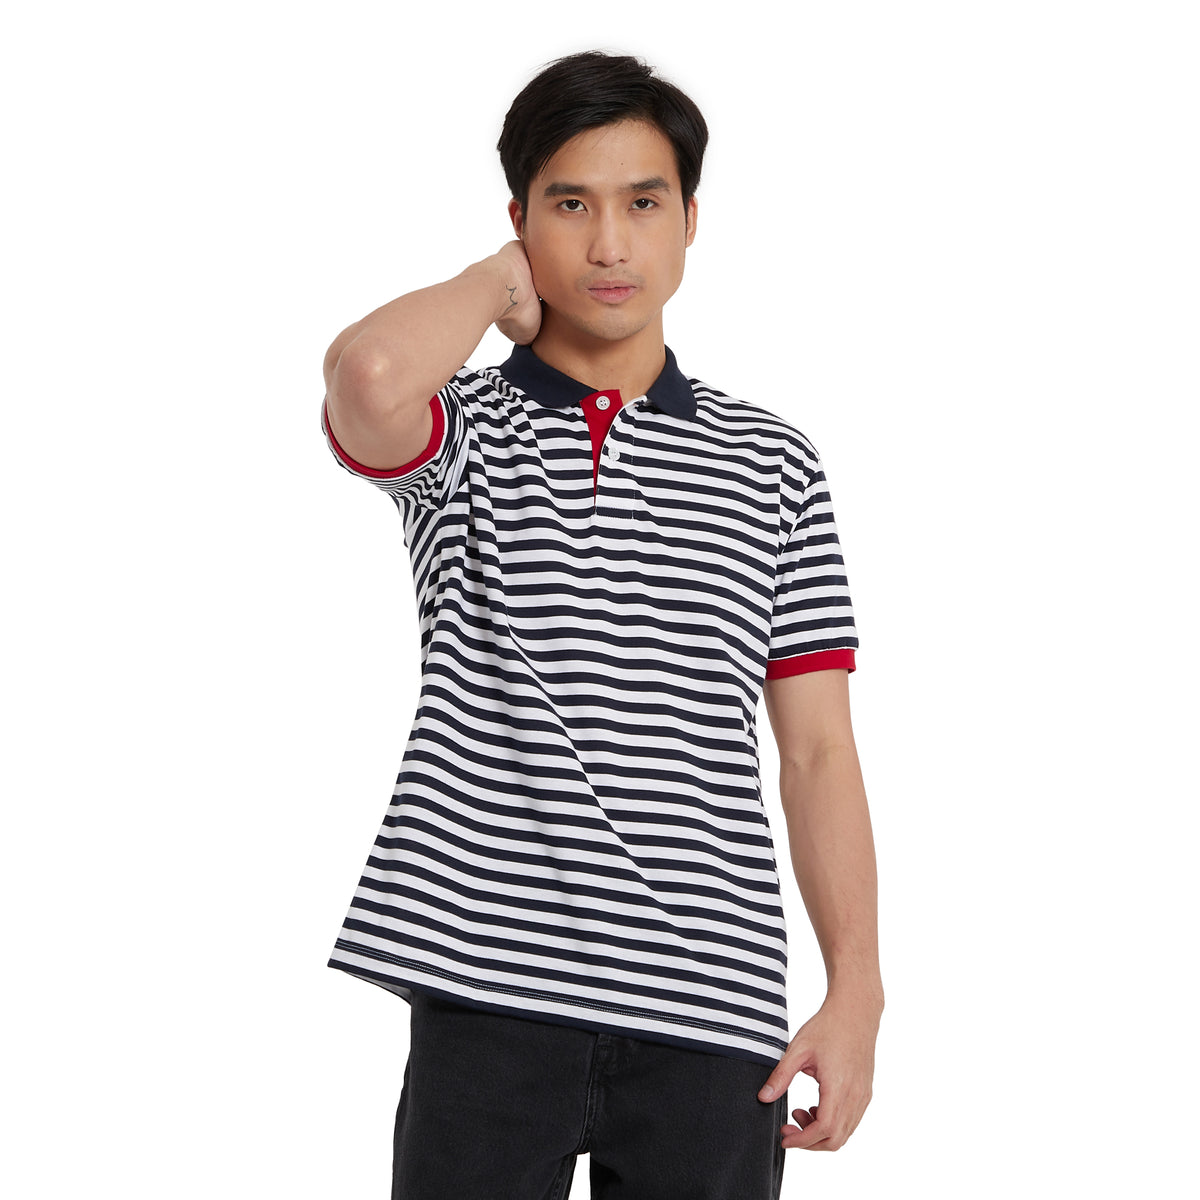 Cubic Mens Stripes  Polo Shirt Polo-shirt Collar Top Top for Men - CMS2322C